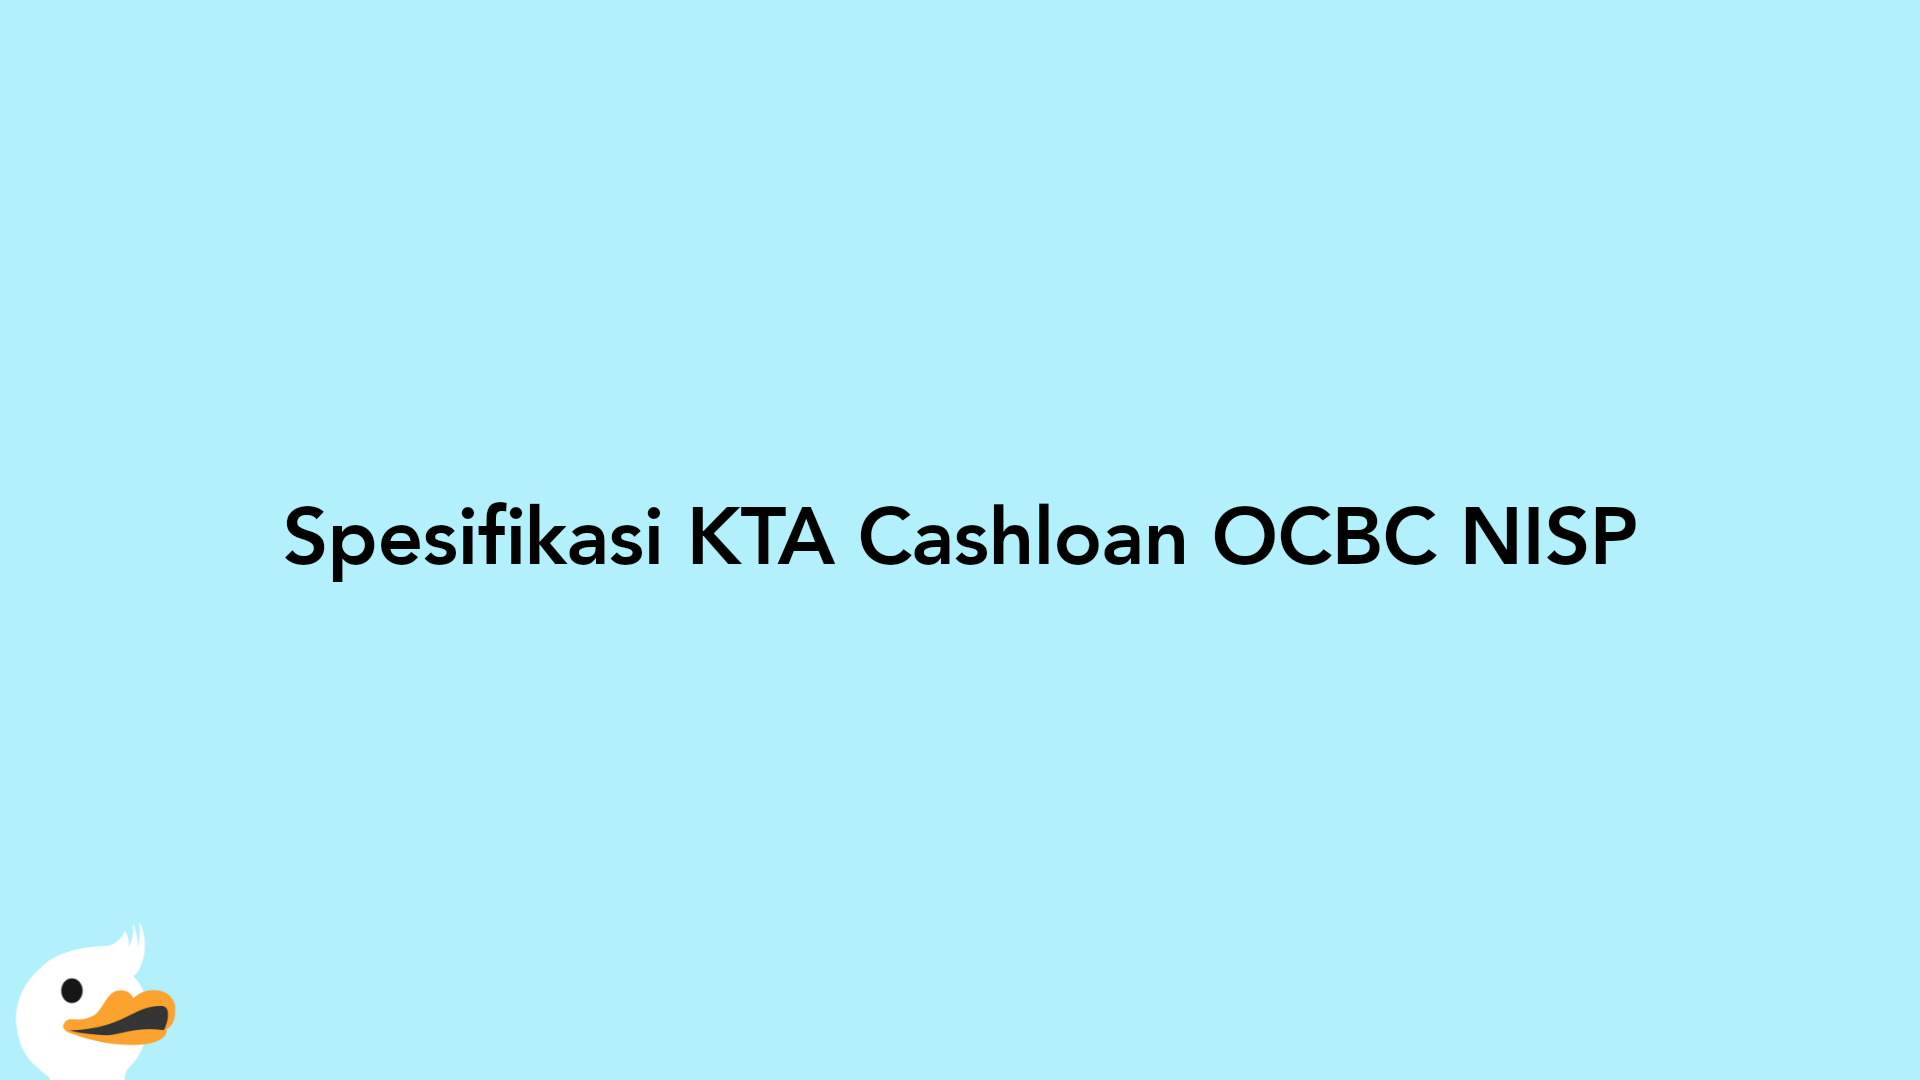 Spesifikasi KTA Cashloan OCBC NISP